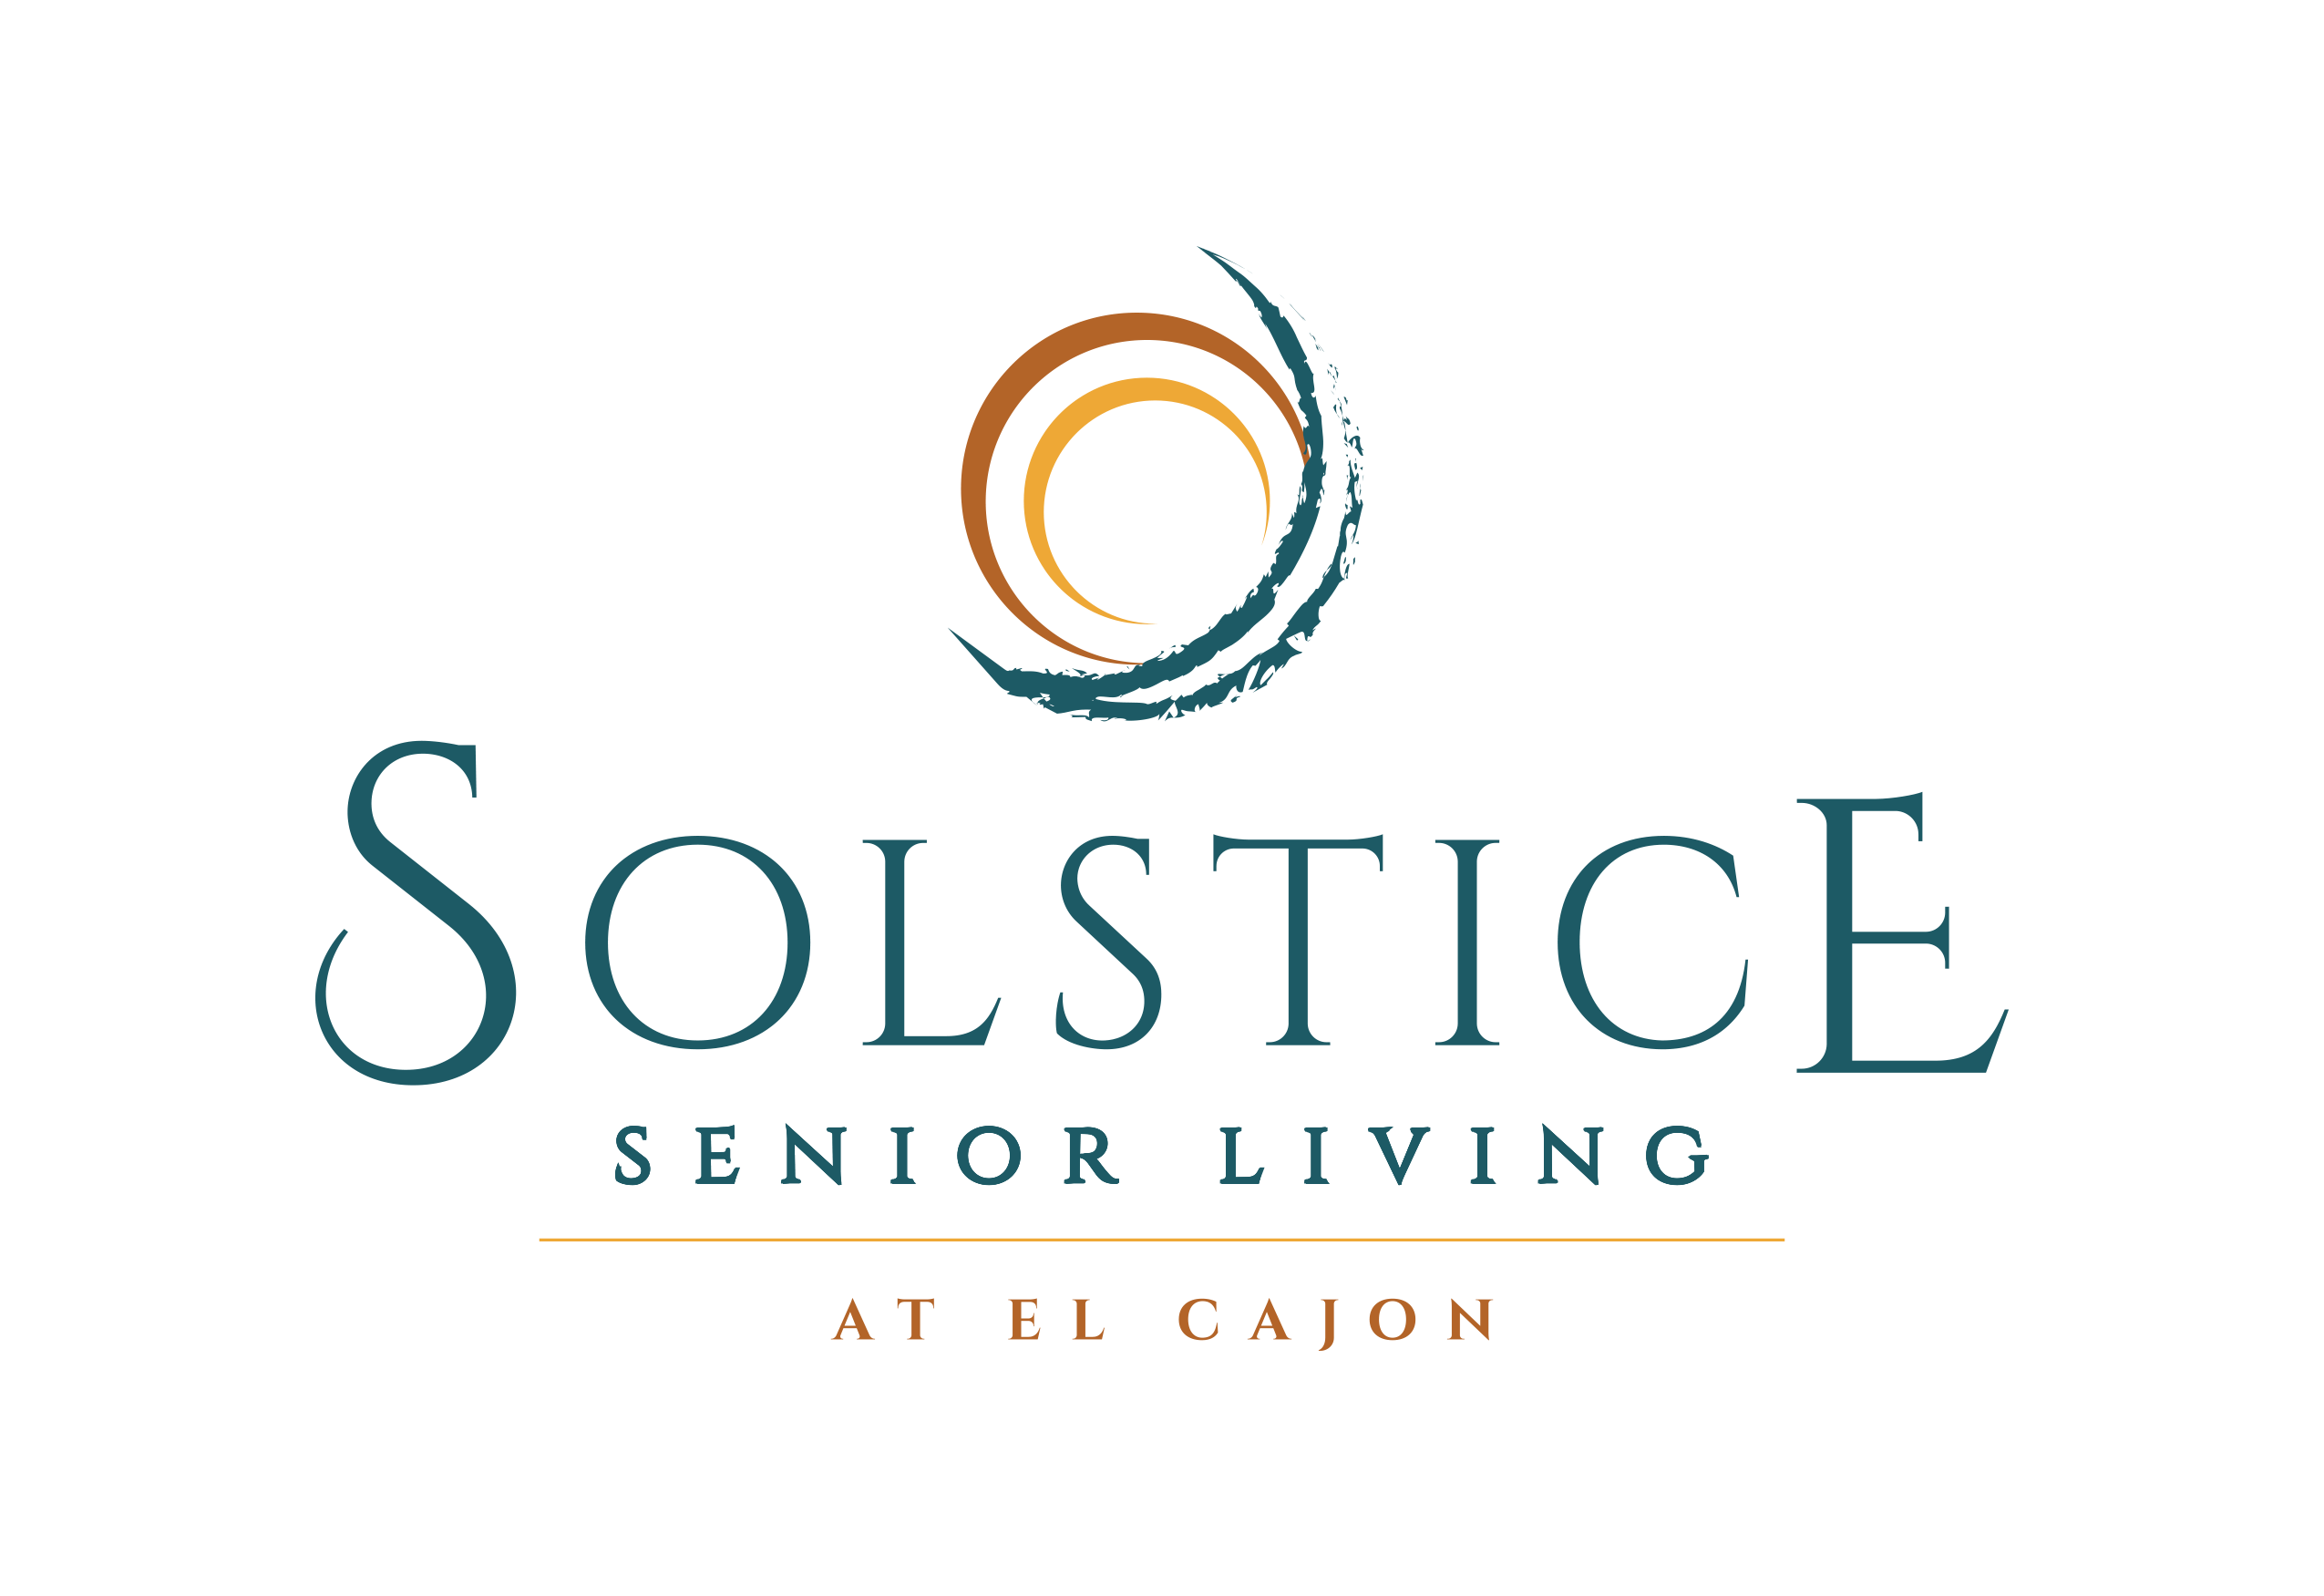 Solstice Senior Living at El Cajon